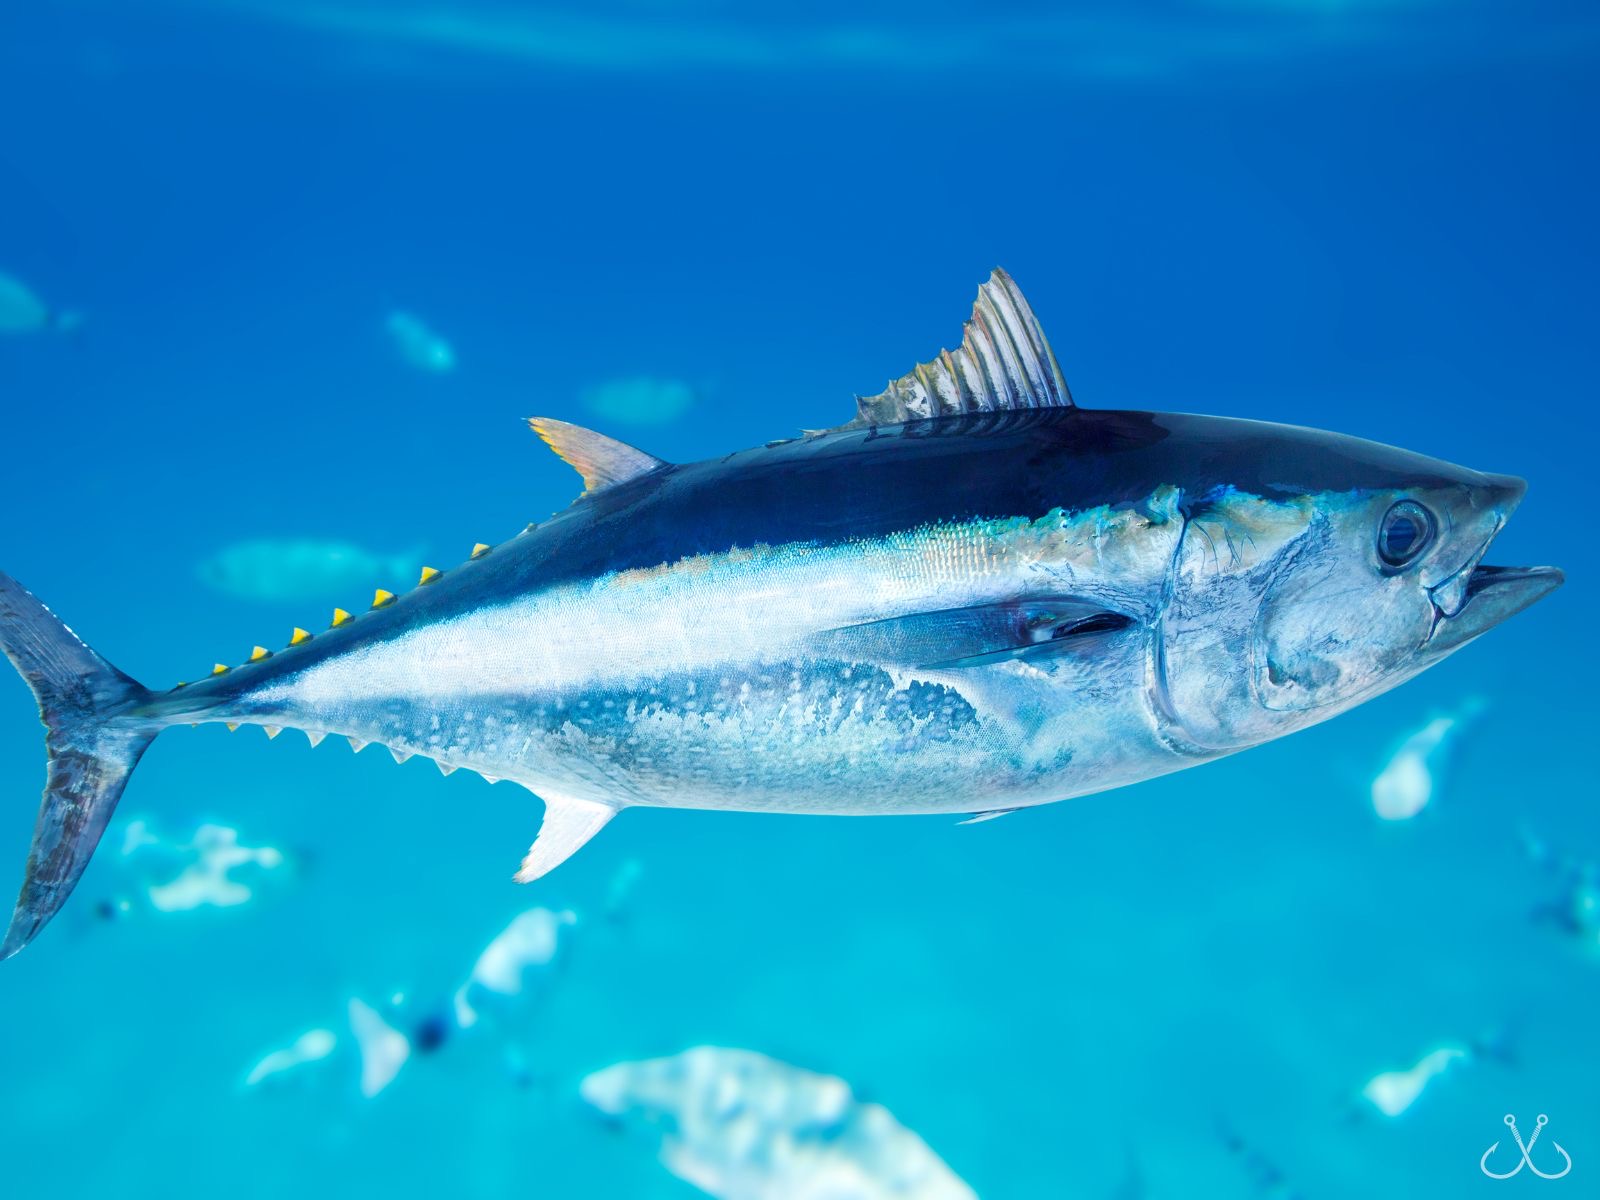 a bluefin tuna swimming in the water